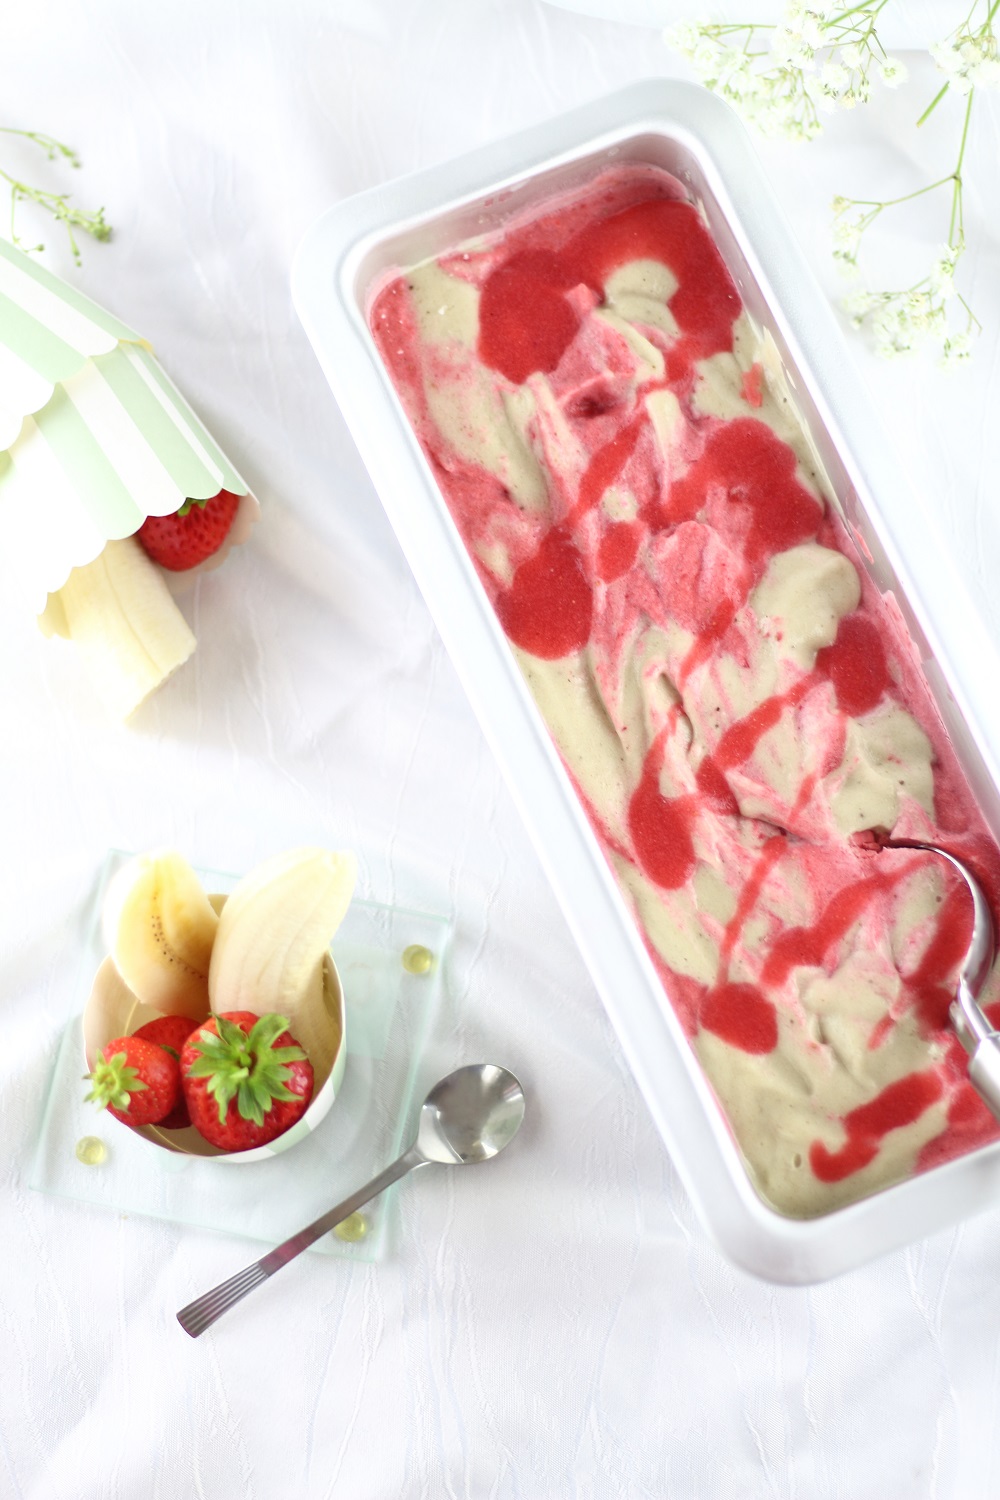 Nicecream - Leckeres Erdbeer-Bananen-Eis ohne Eismaschine